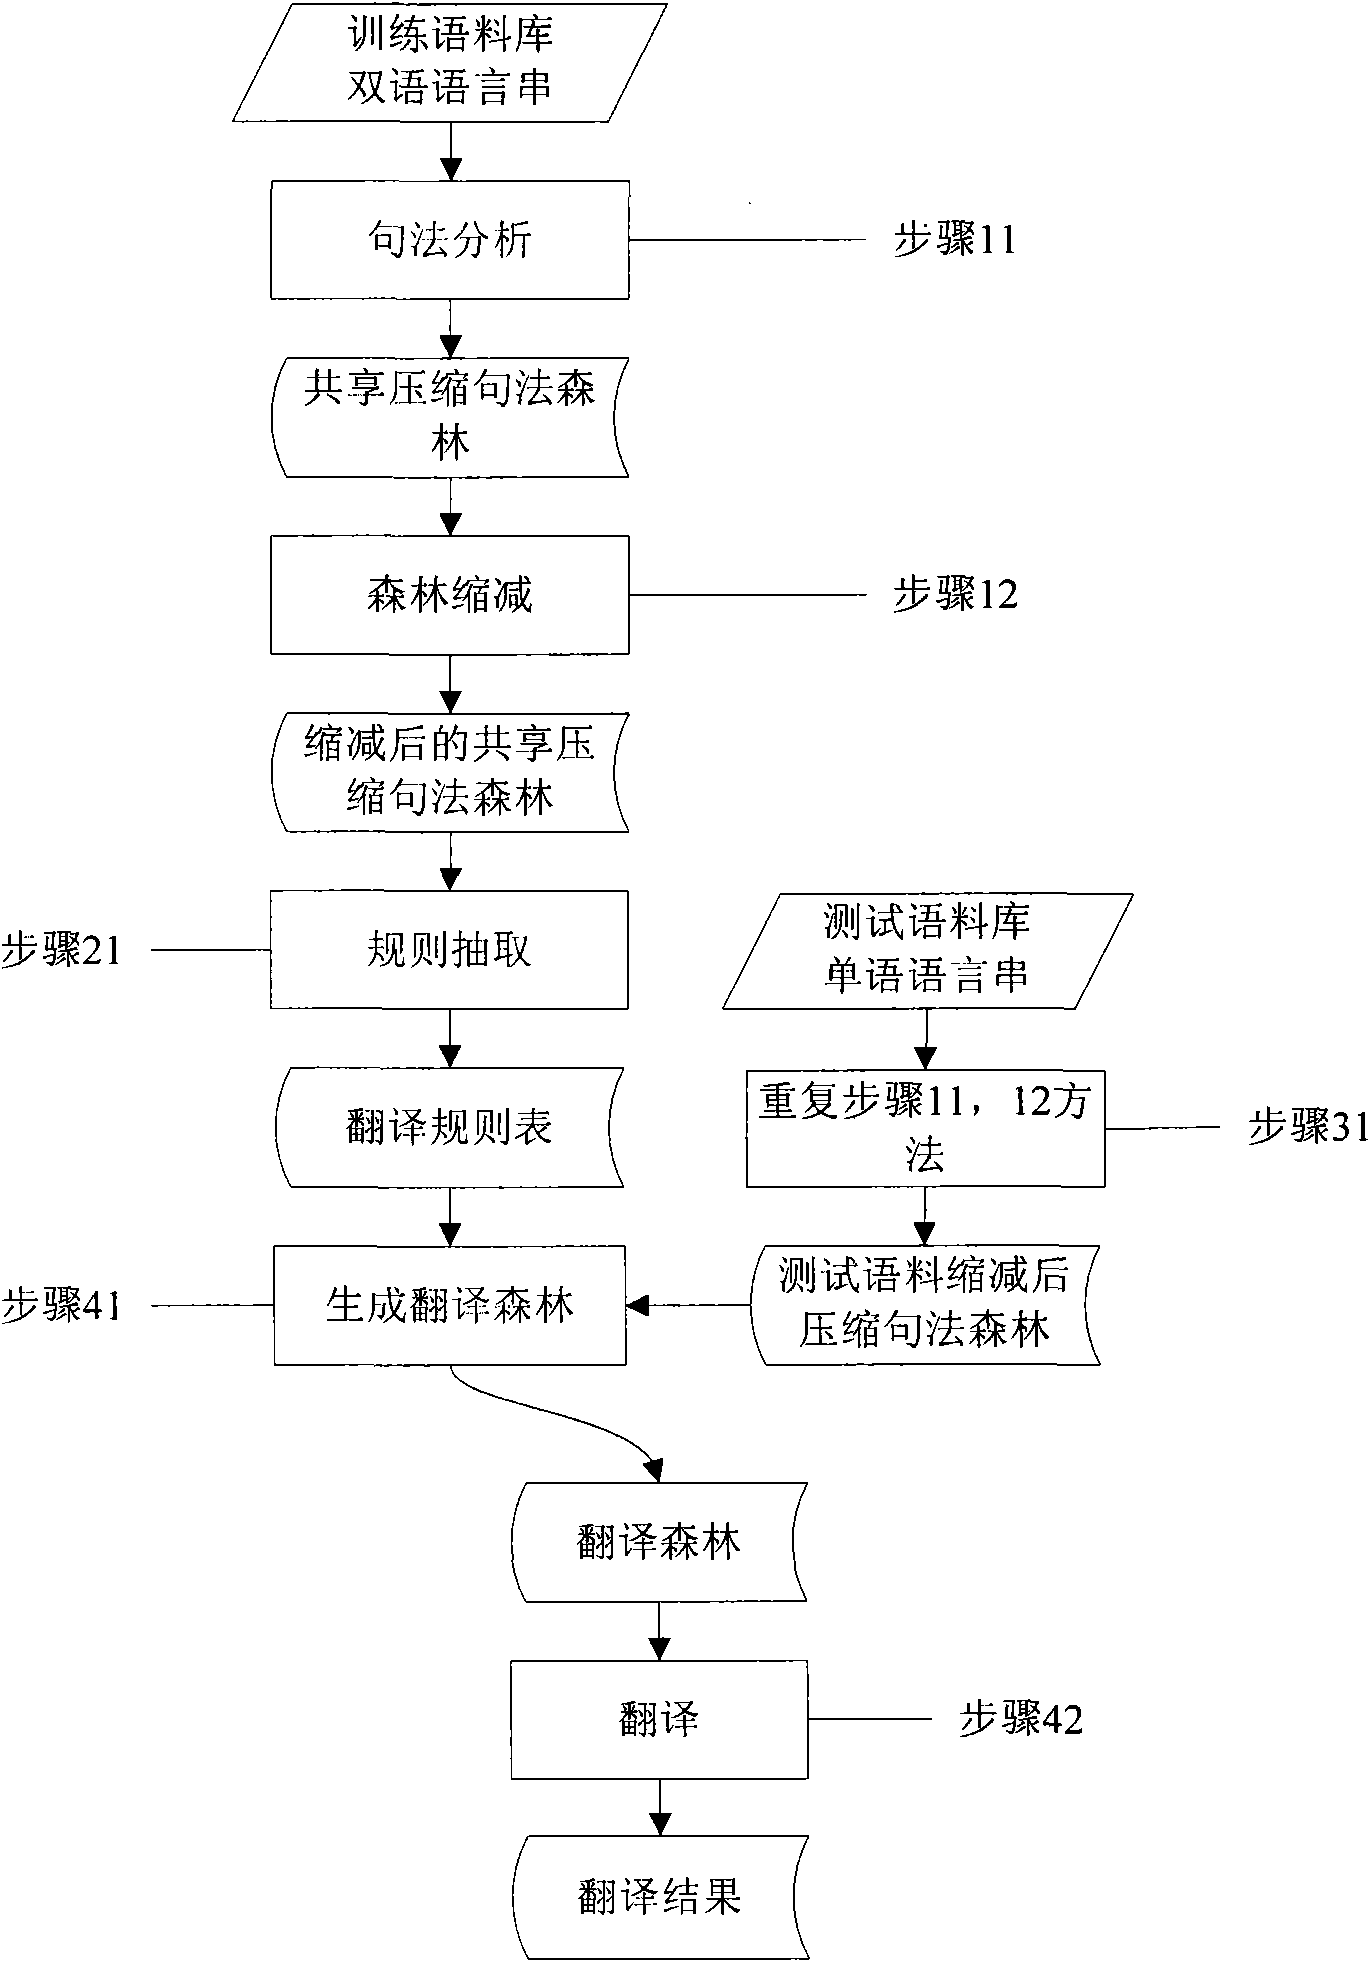 Translation rule extract method and translation method based on tree-to-tree translation model